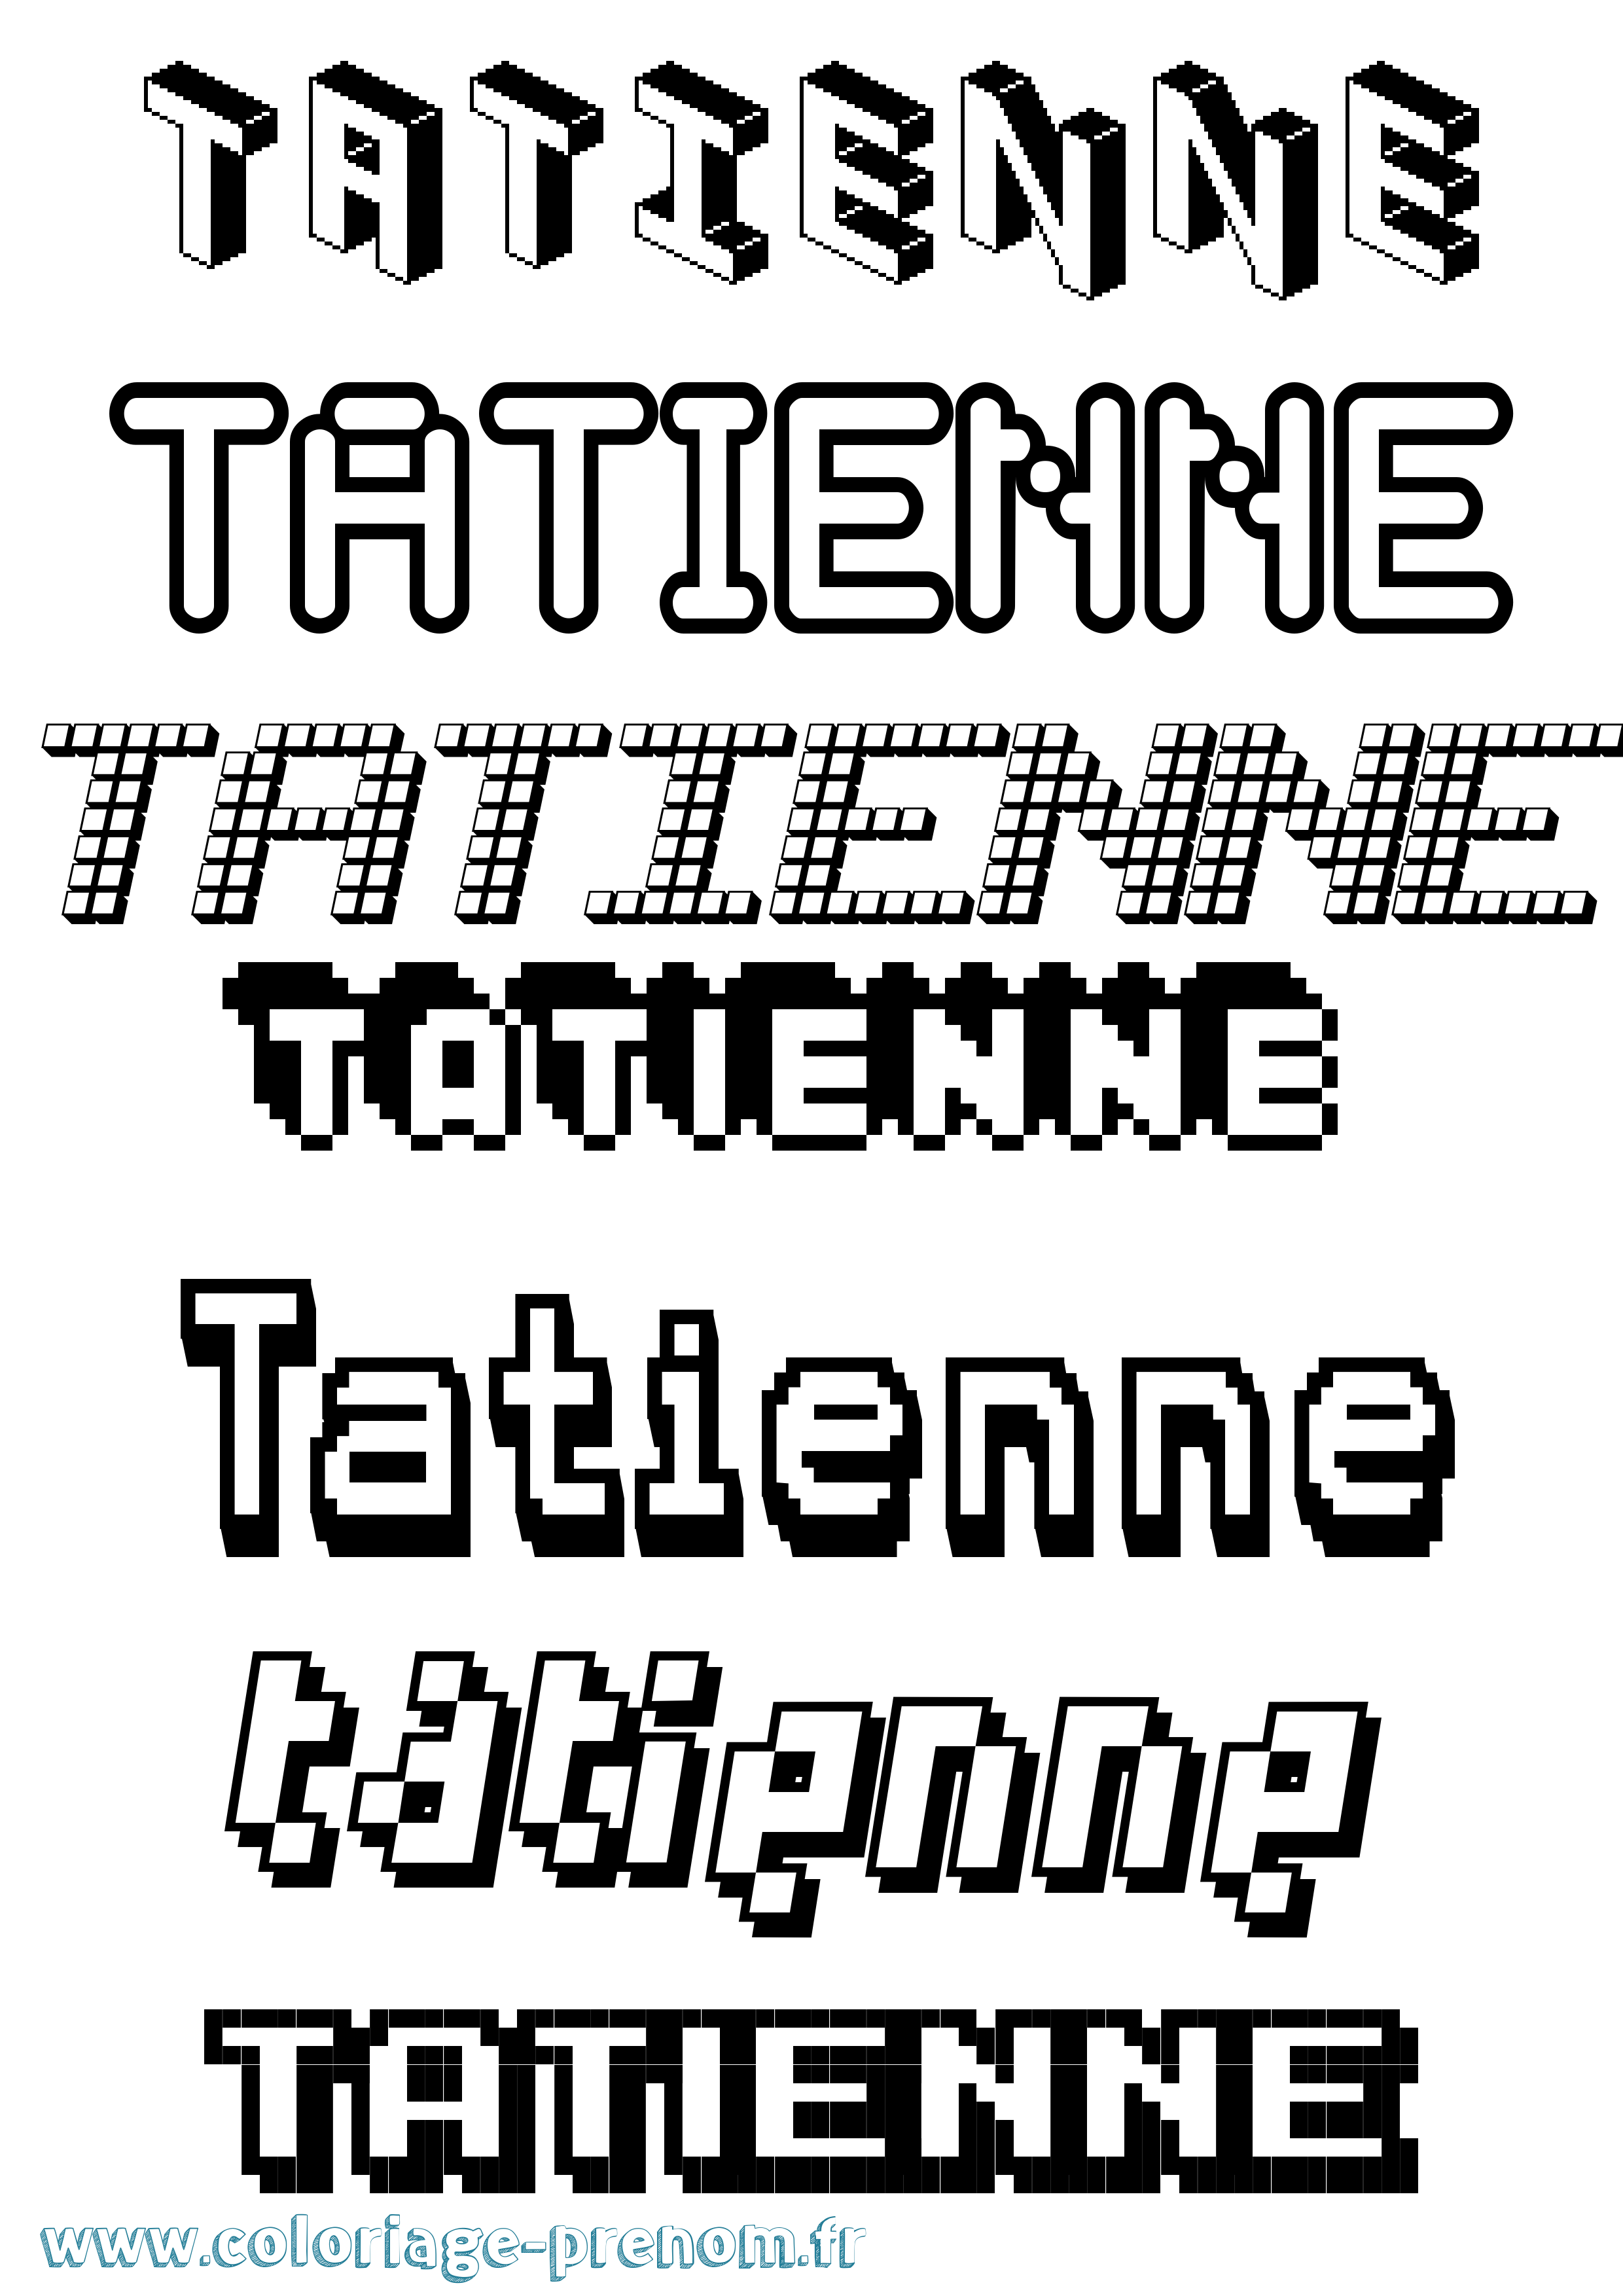 Coloriage prénom Tatienne Pixel